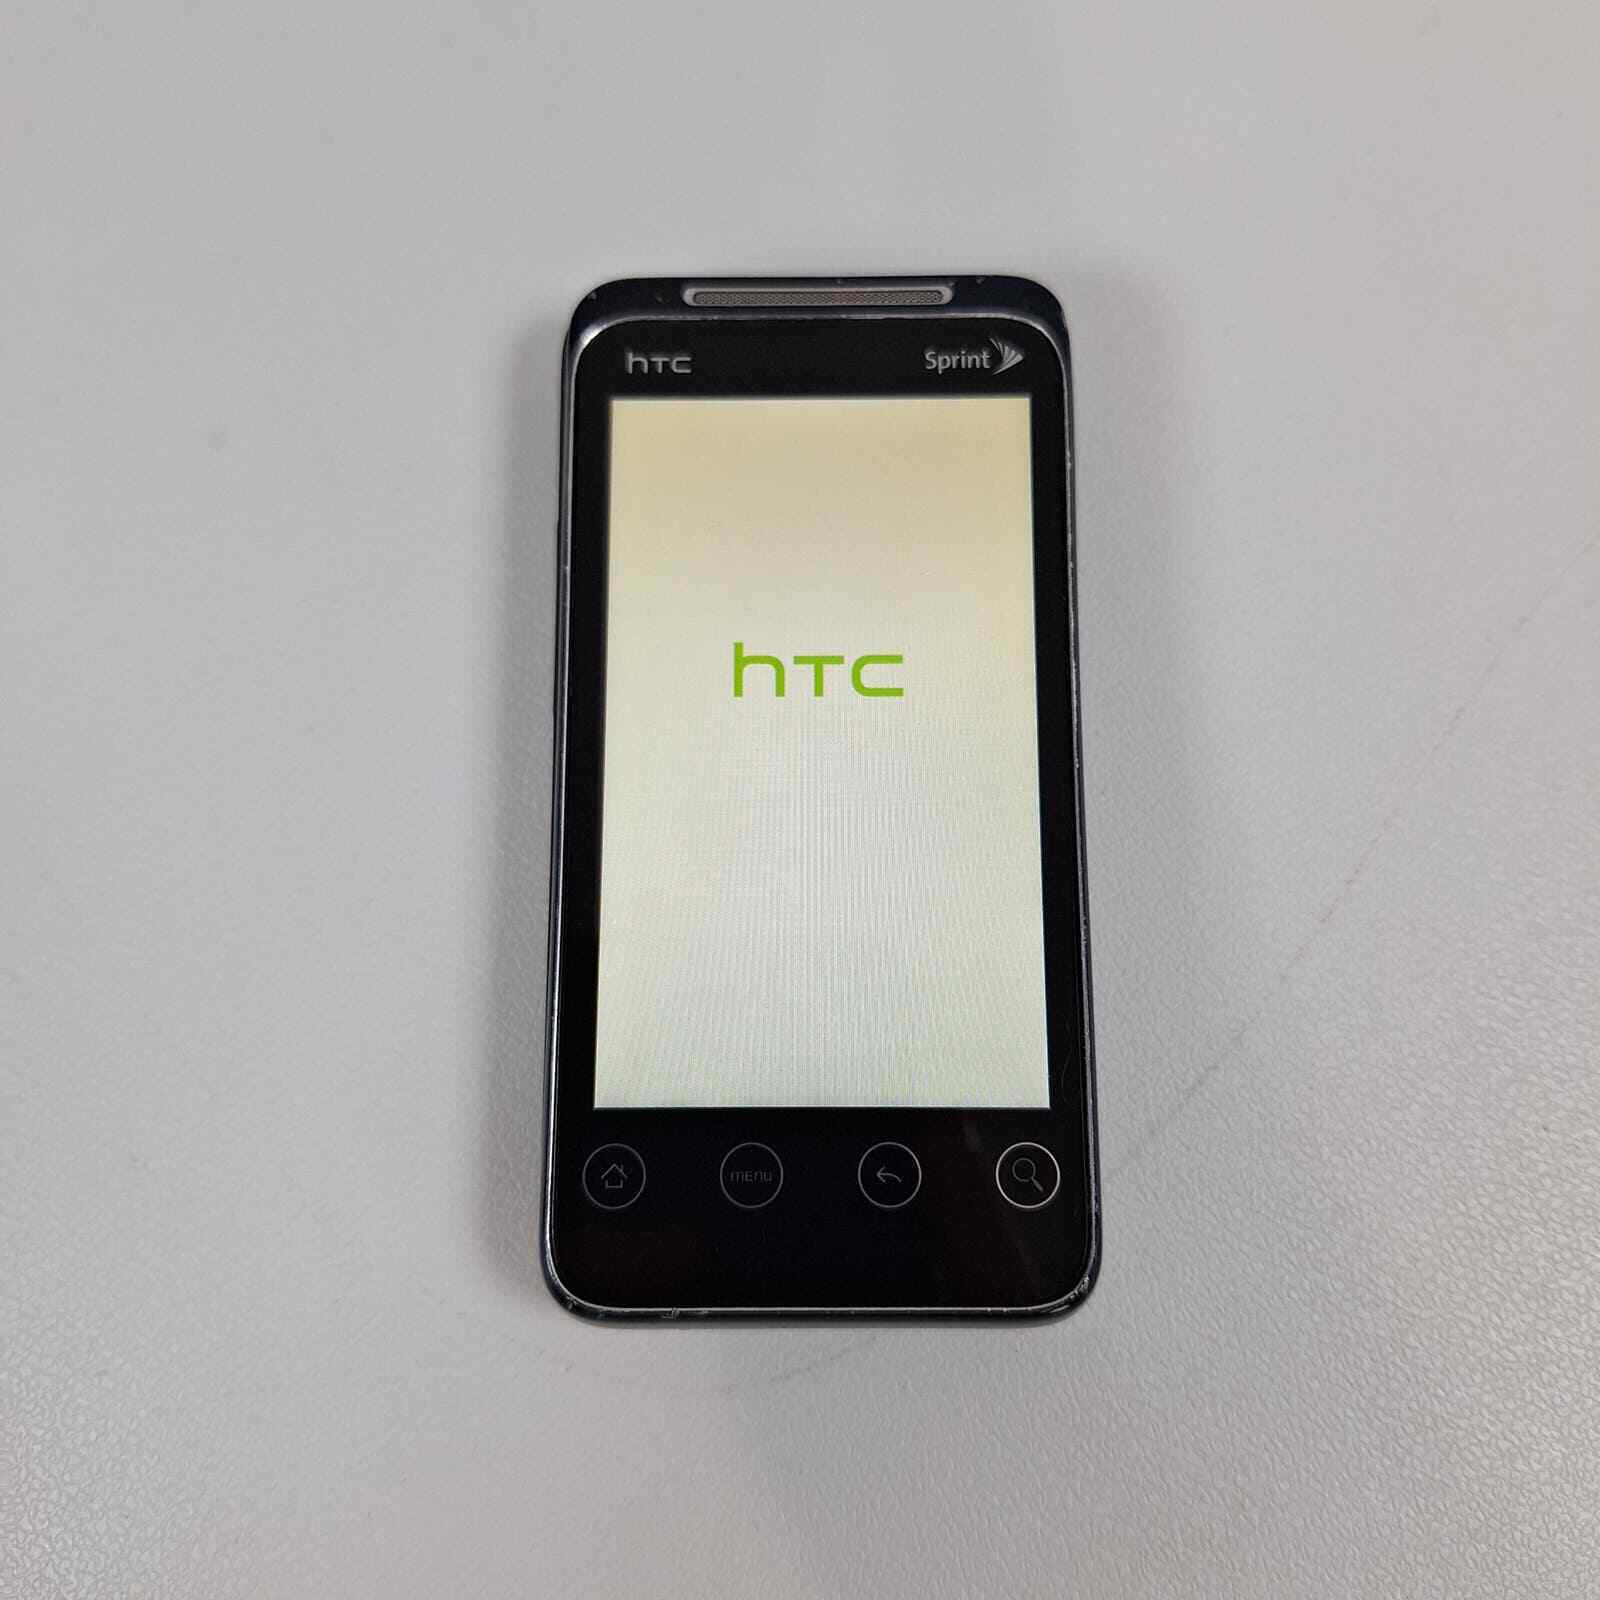 HTC Evo Shift 4G (PG06100) Black Keyboard Slide Phone (Sprint) - $32.99